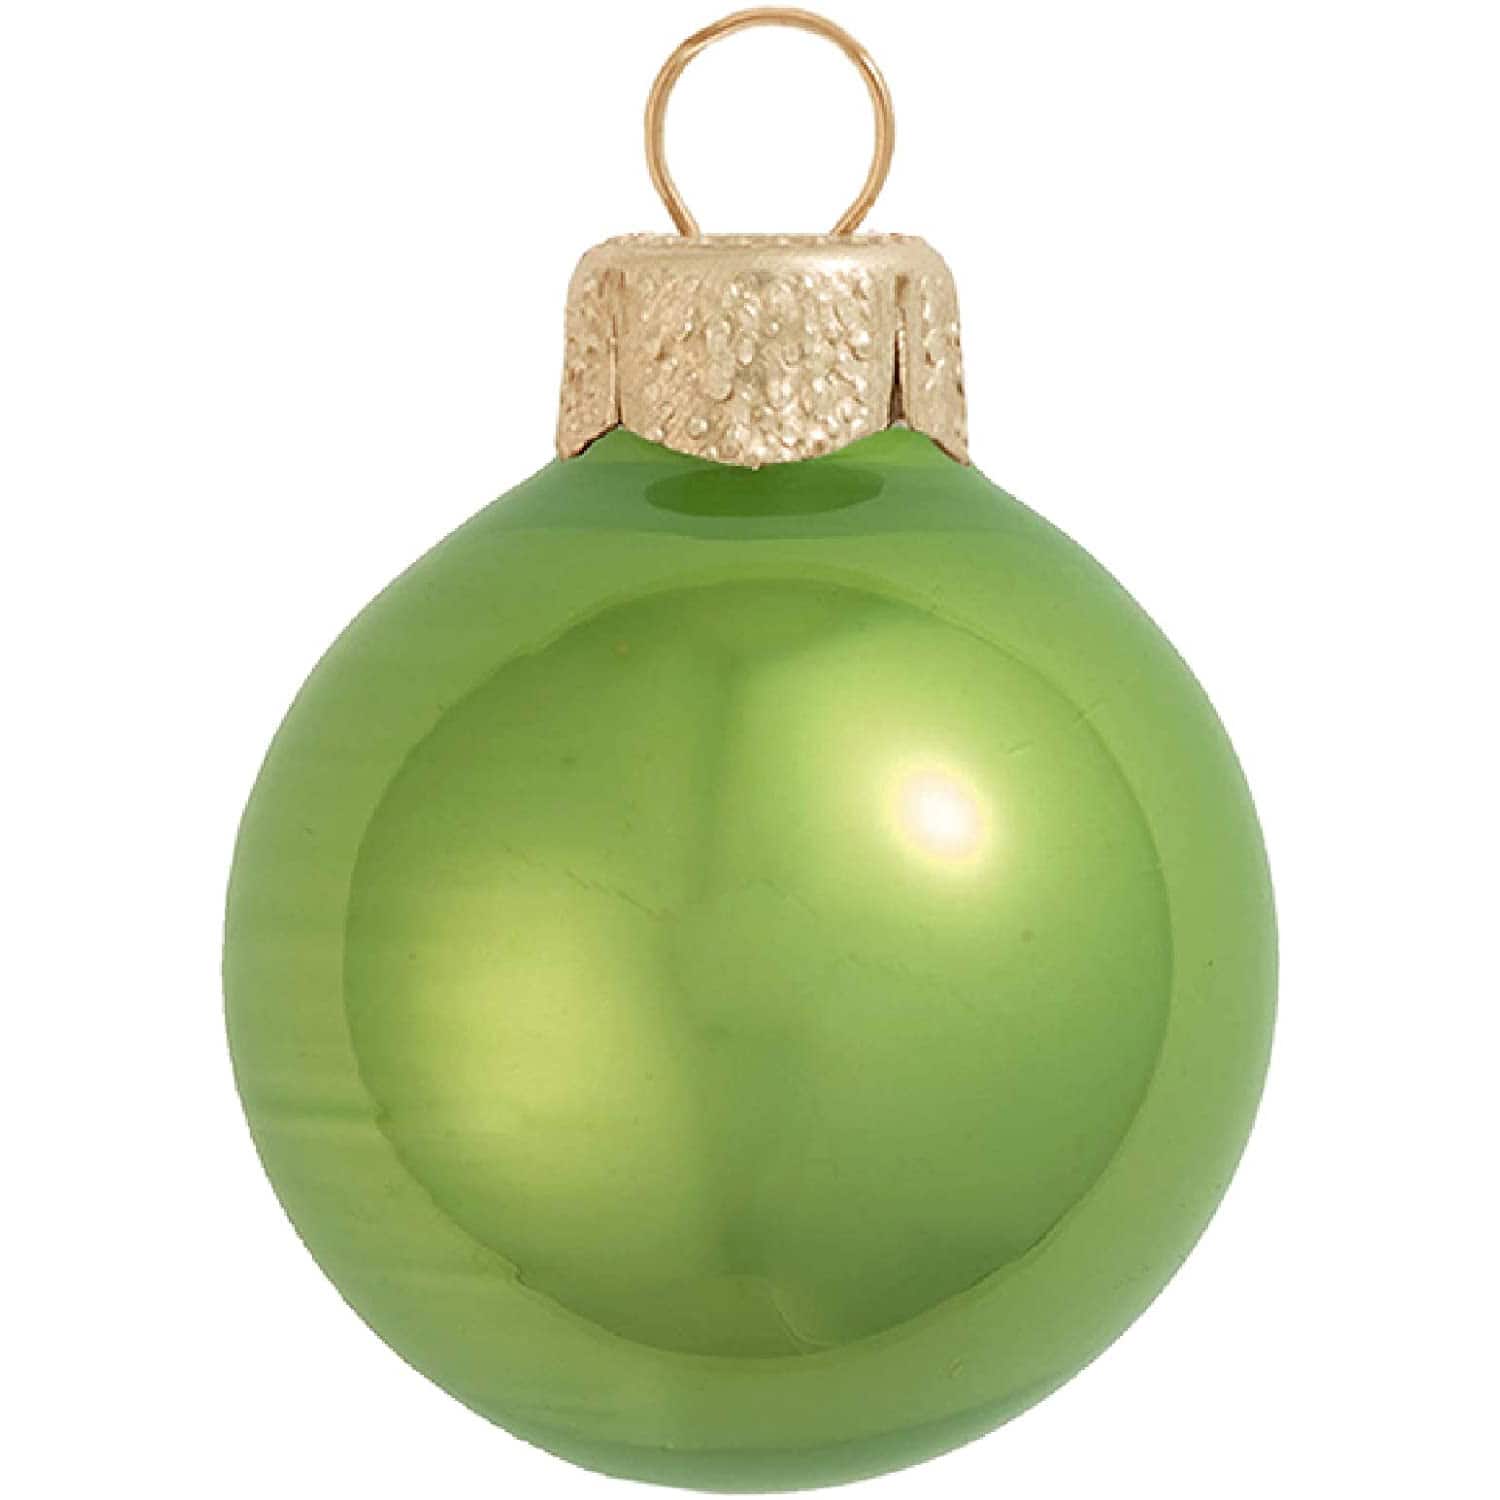 Whitehurst 12ct. 2.75" Pearl Glass Ball Ornaments